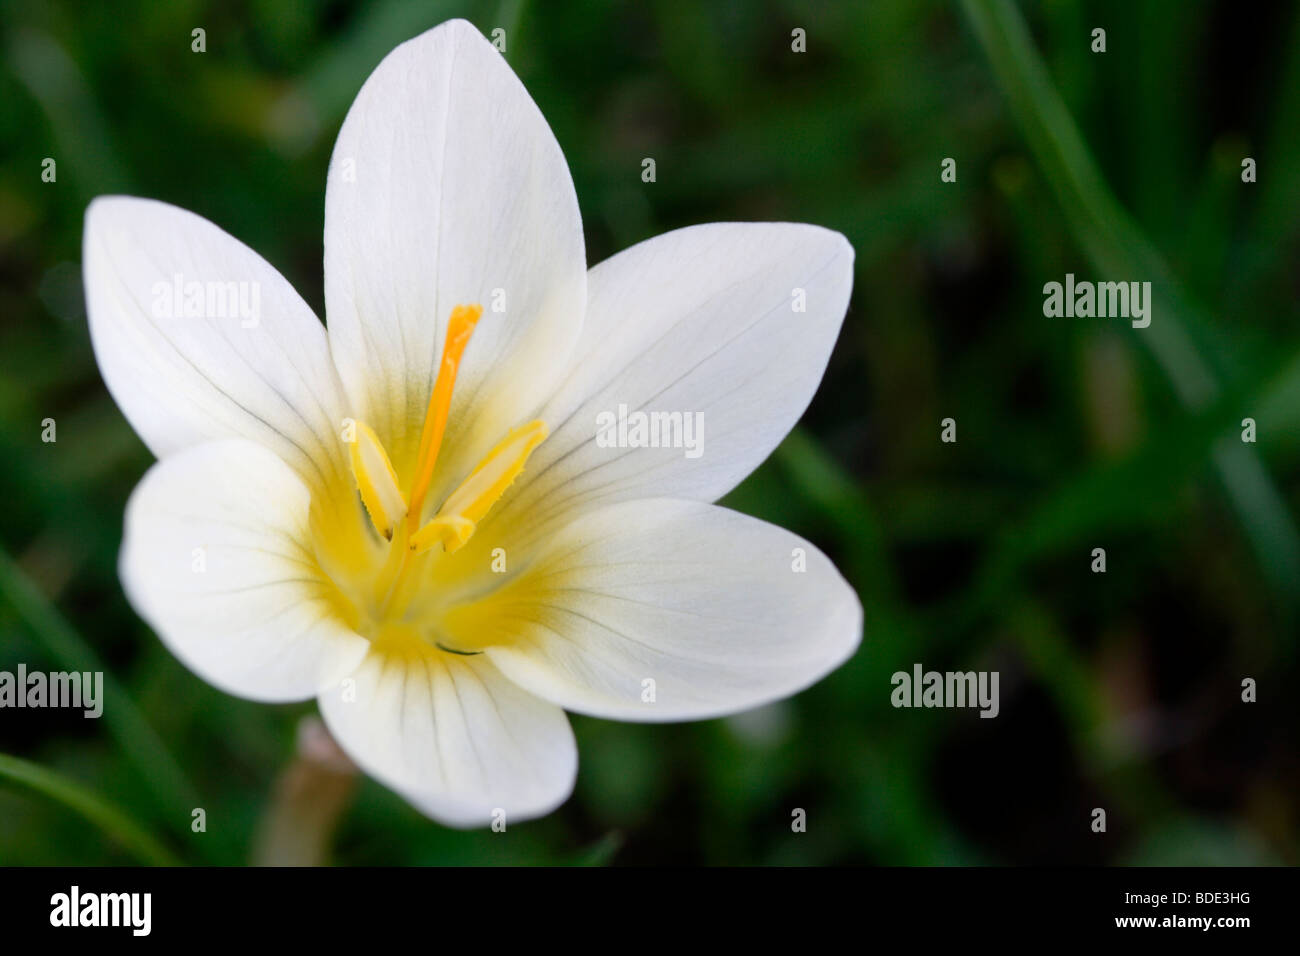 White crocus flower close up, England, UK Stock Photo